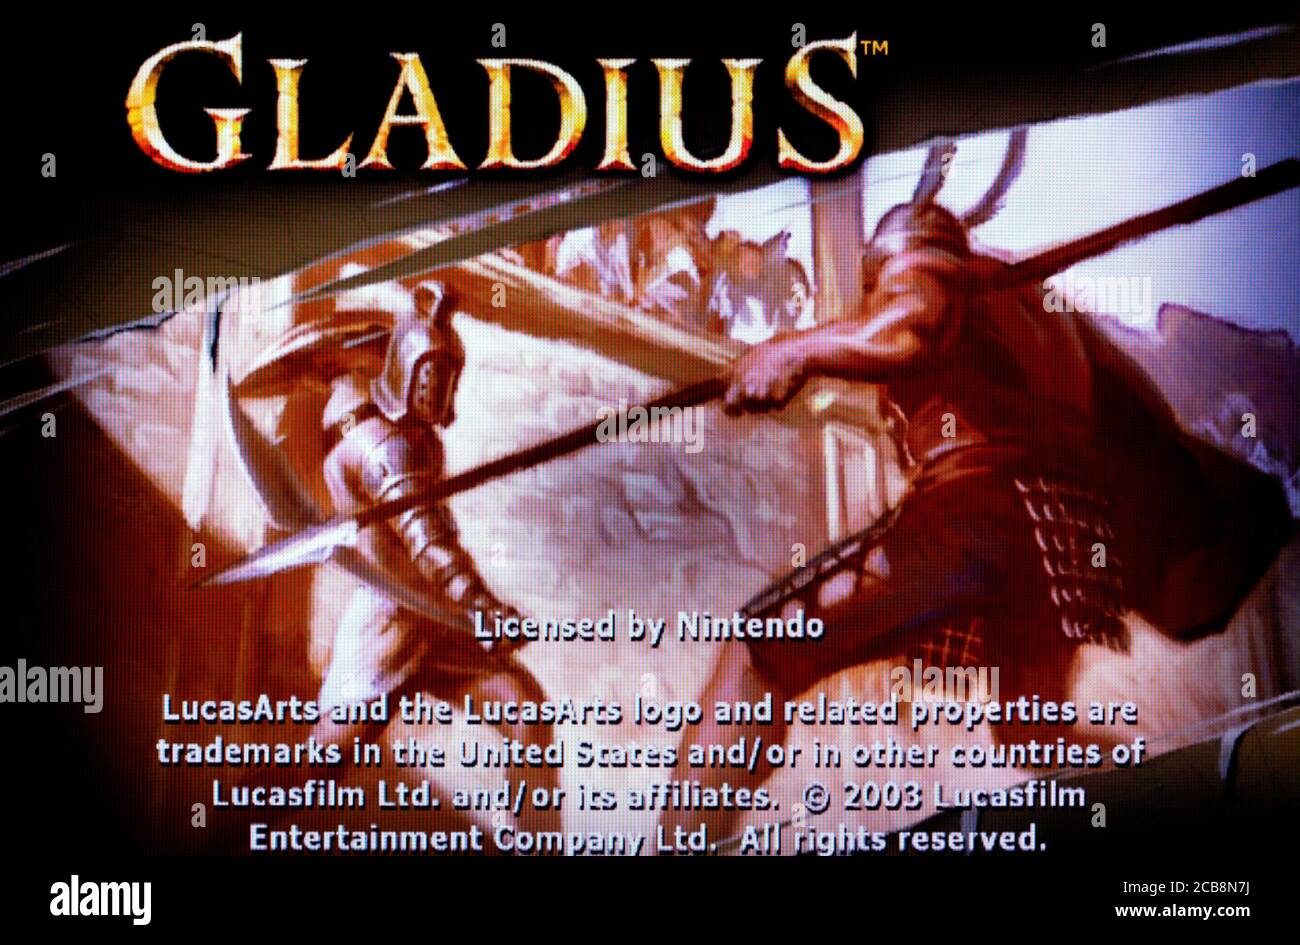 Gladius - Nintendo Gamecube Videogame - Editorial use only Stock Photo